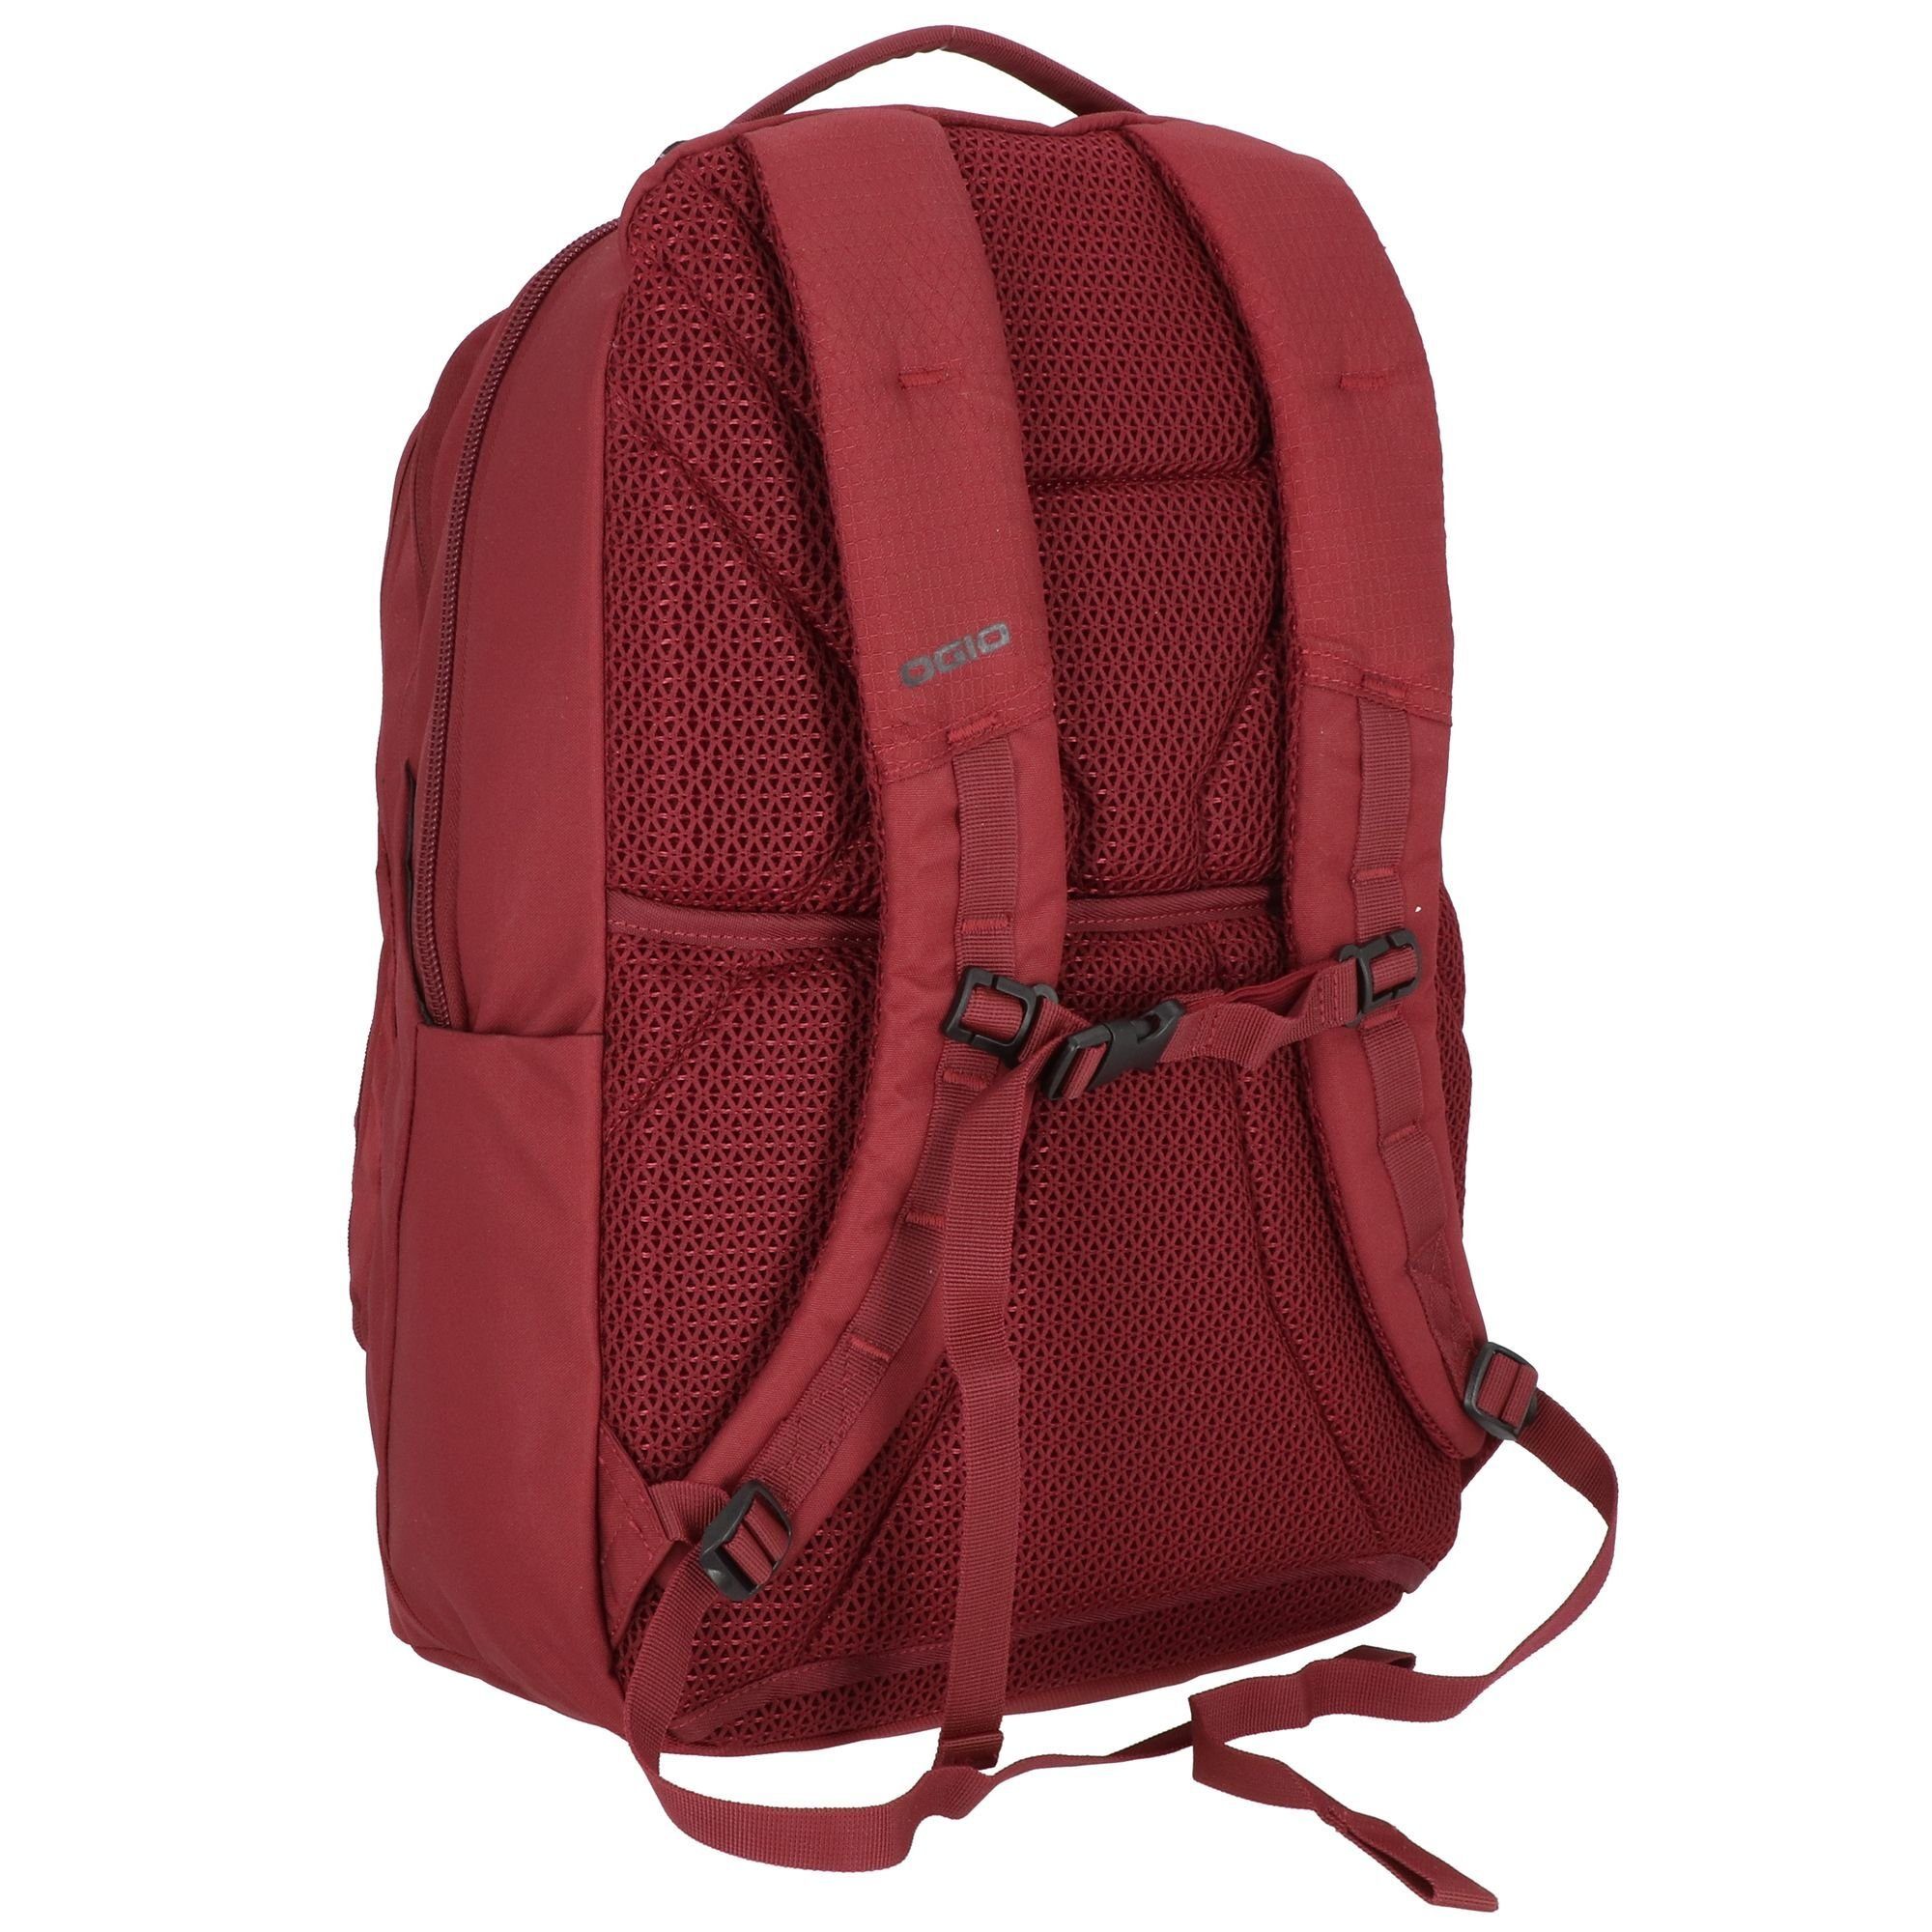 Axle OGIO Pro, burgundy Daypack Polyester